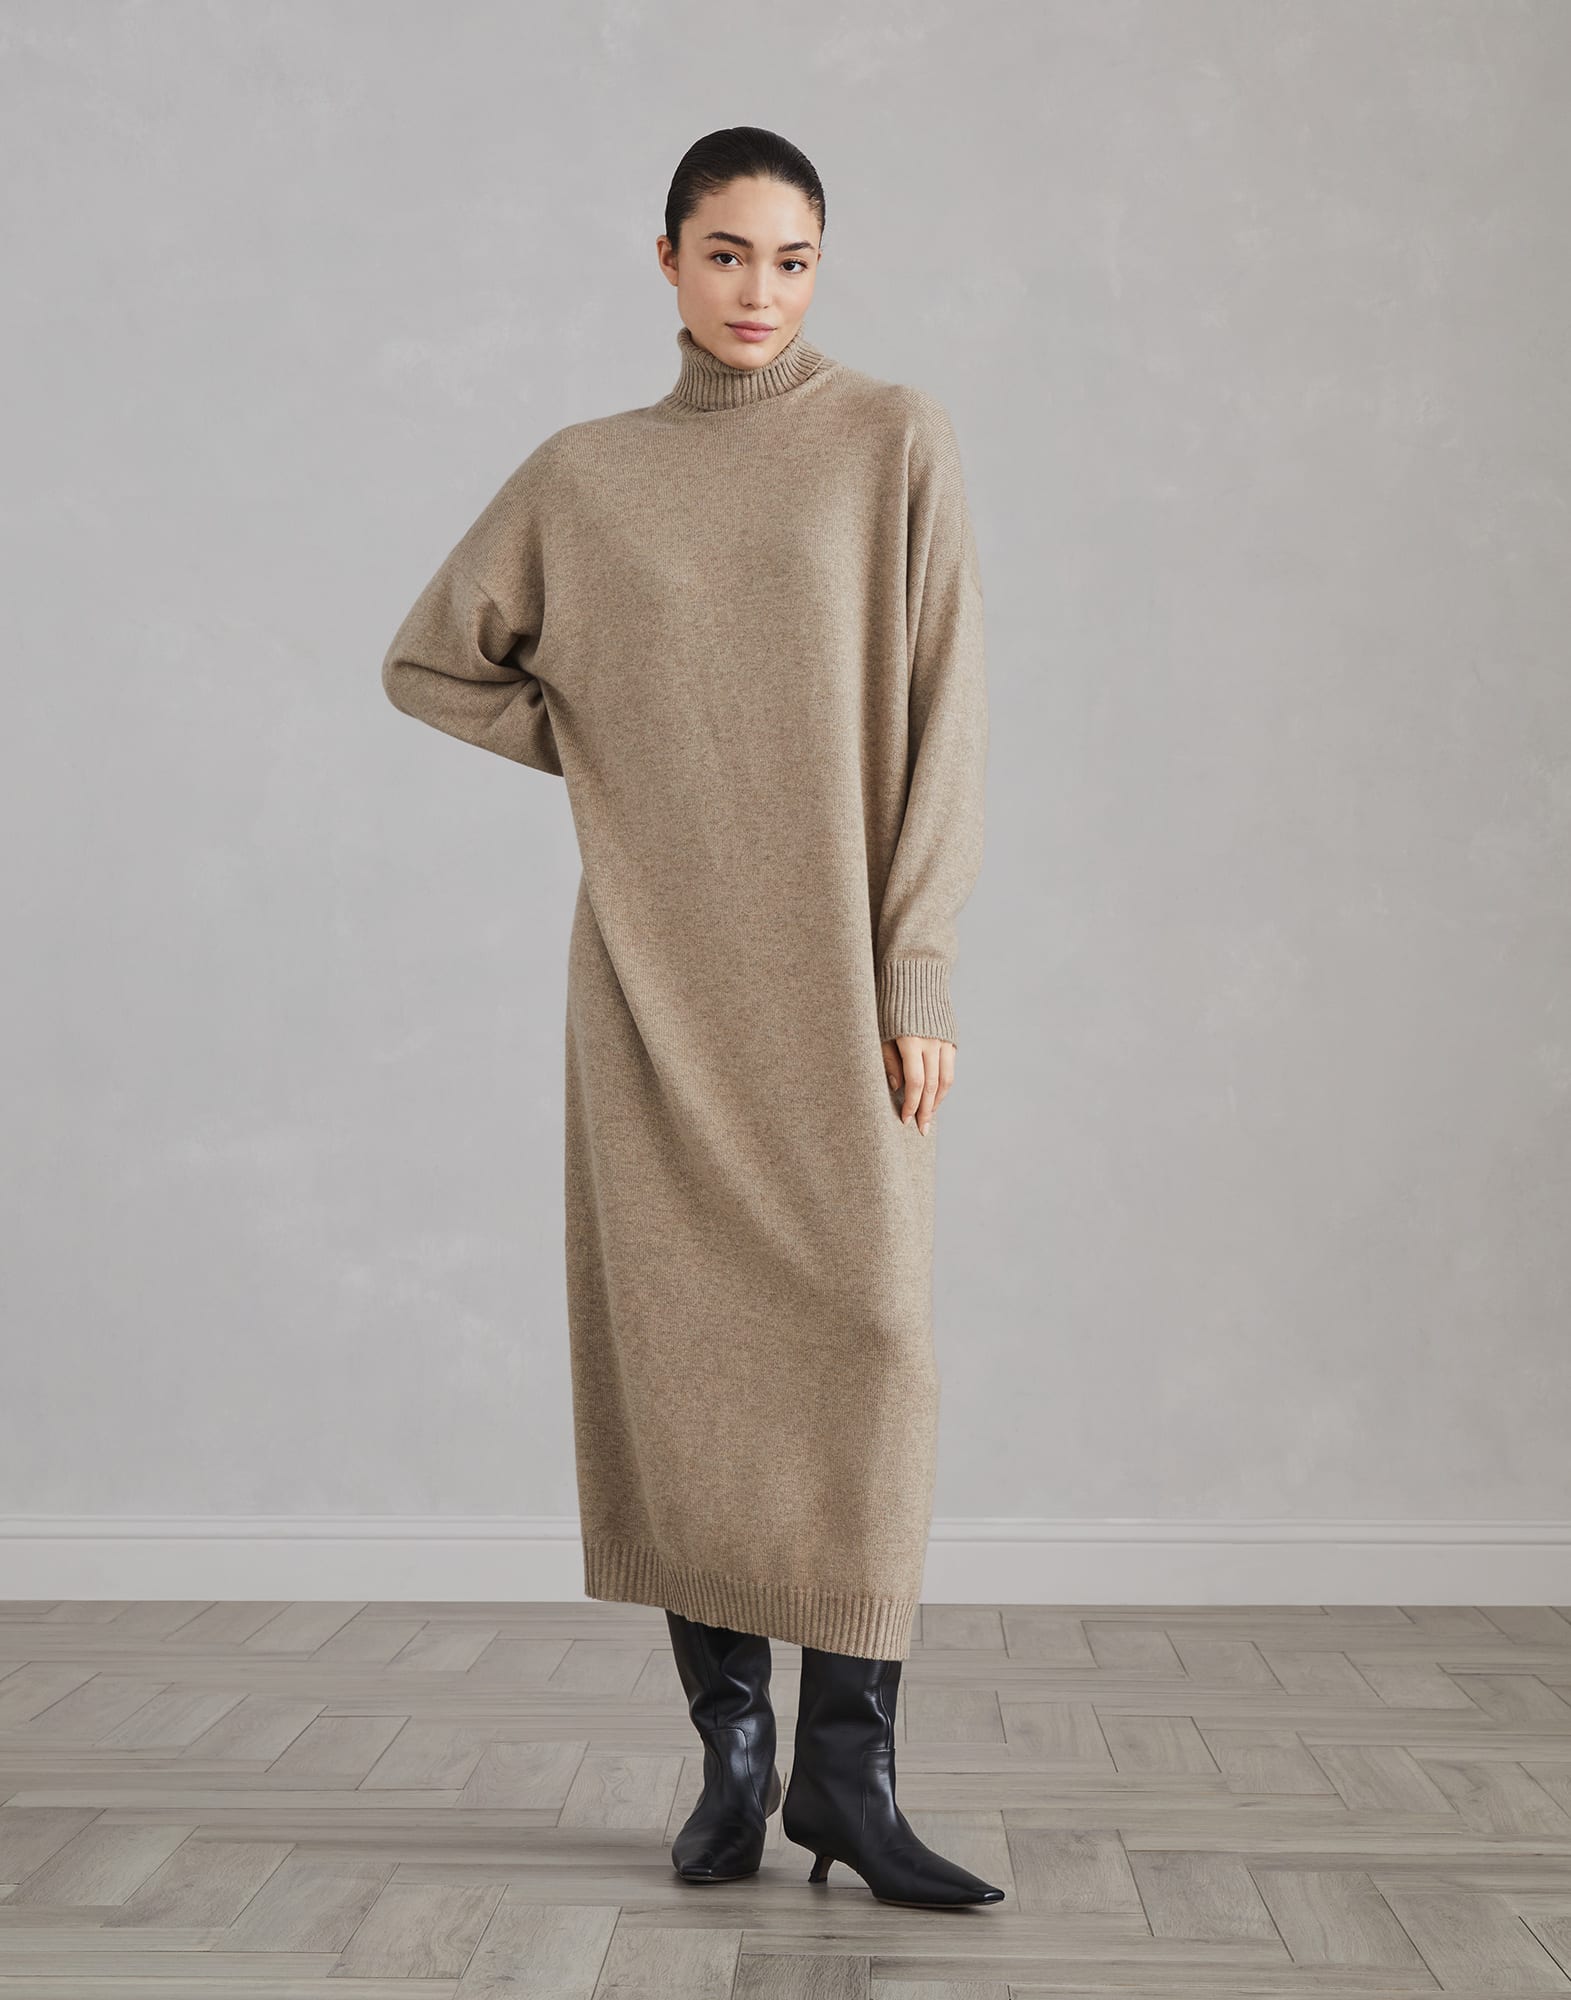 Cashmere knit dress